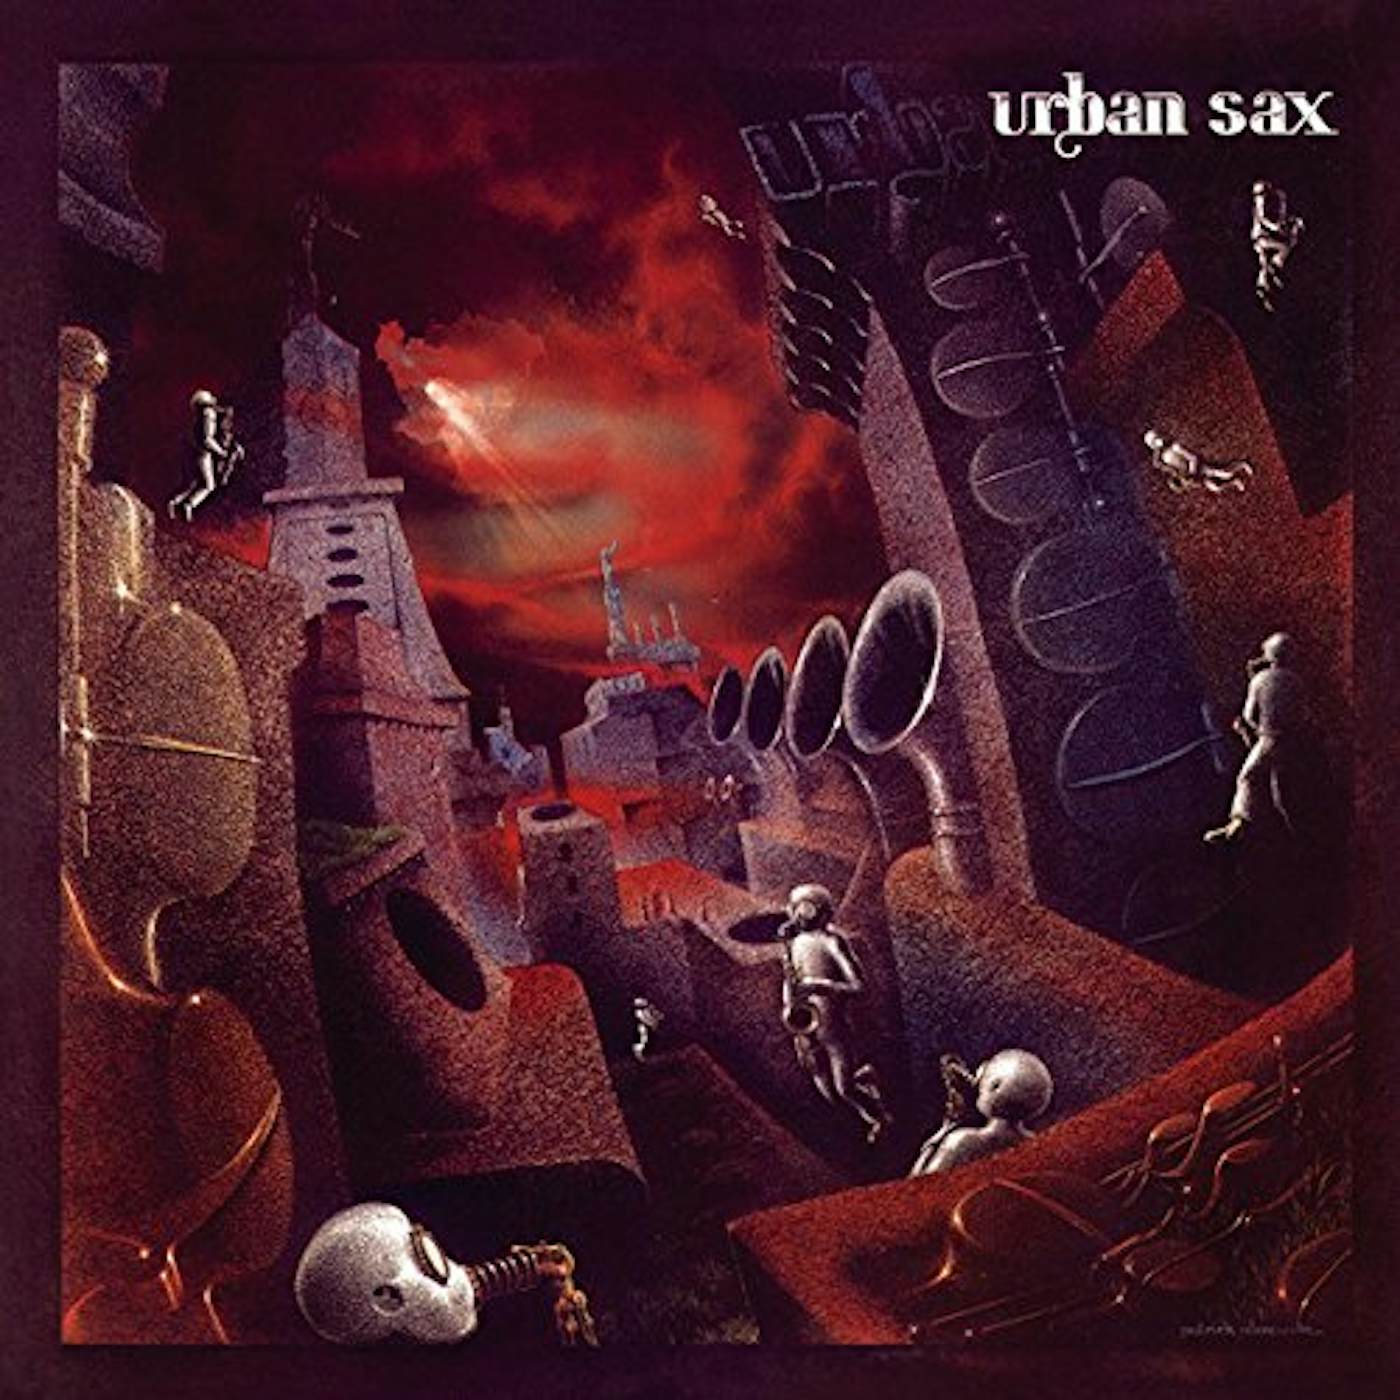 Urban Sax 2 Vinyl Record